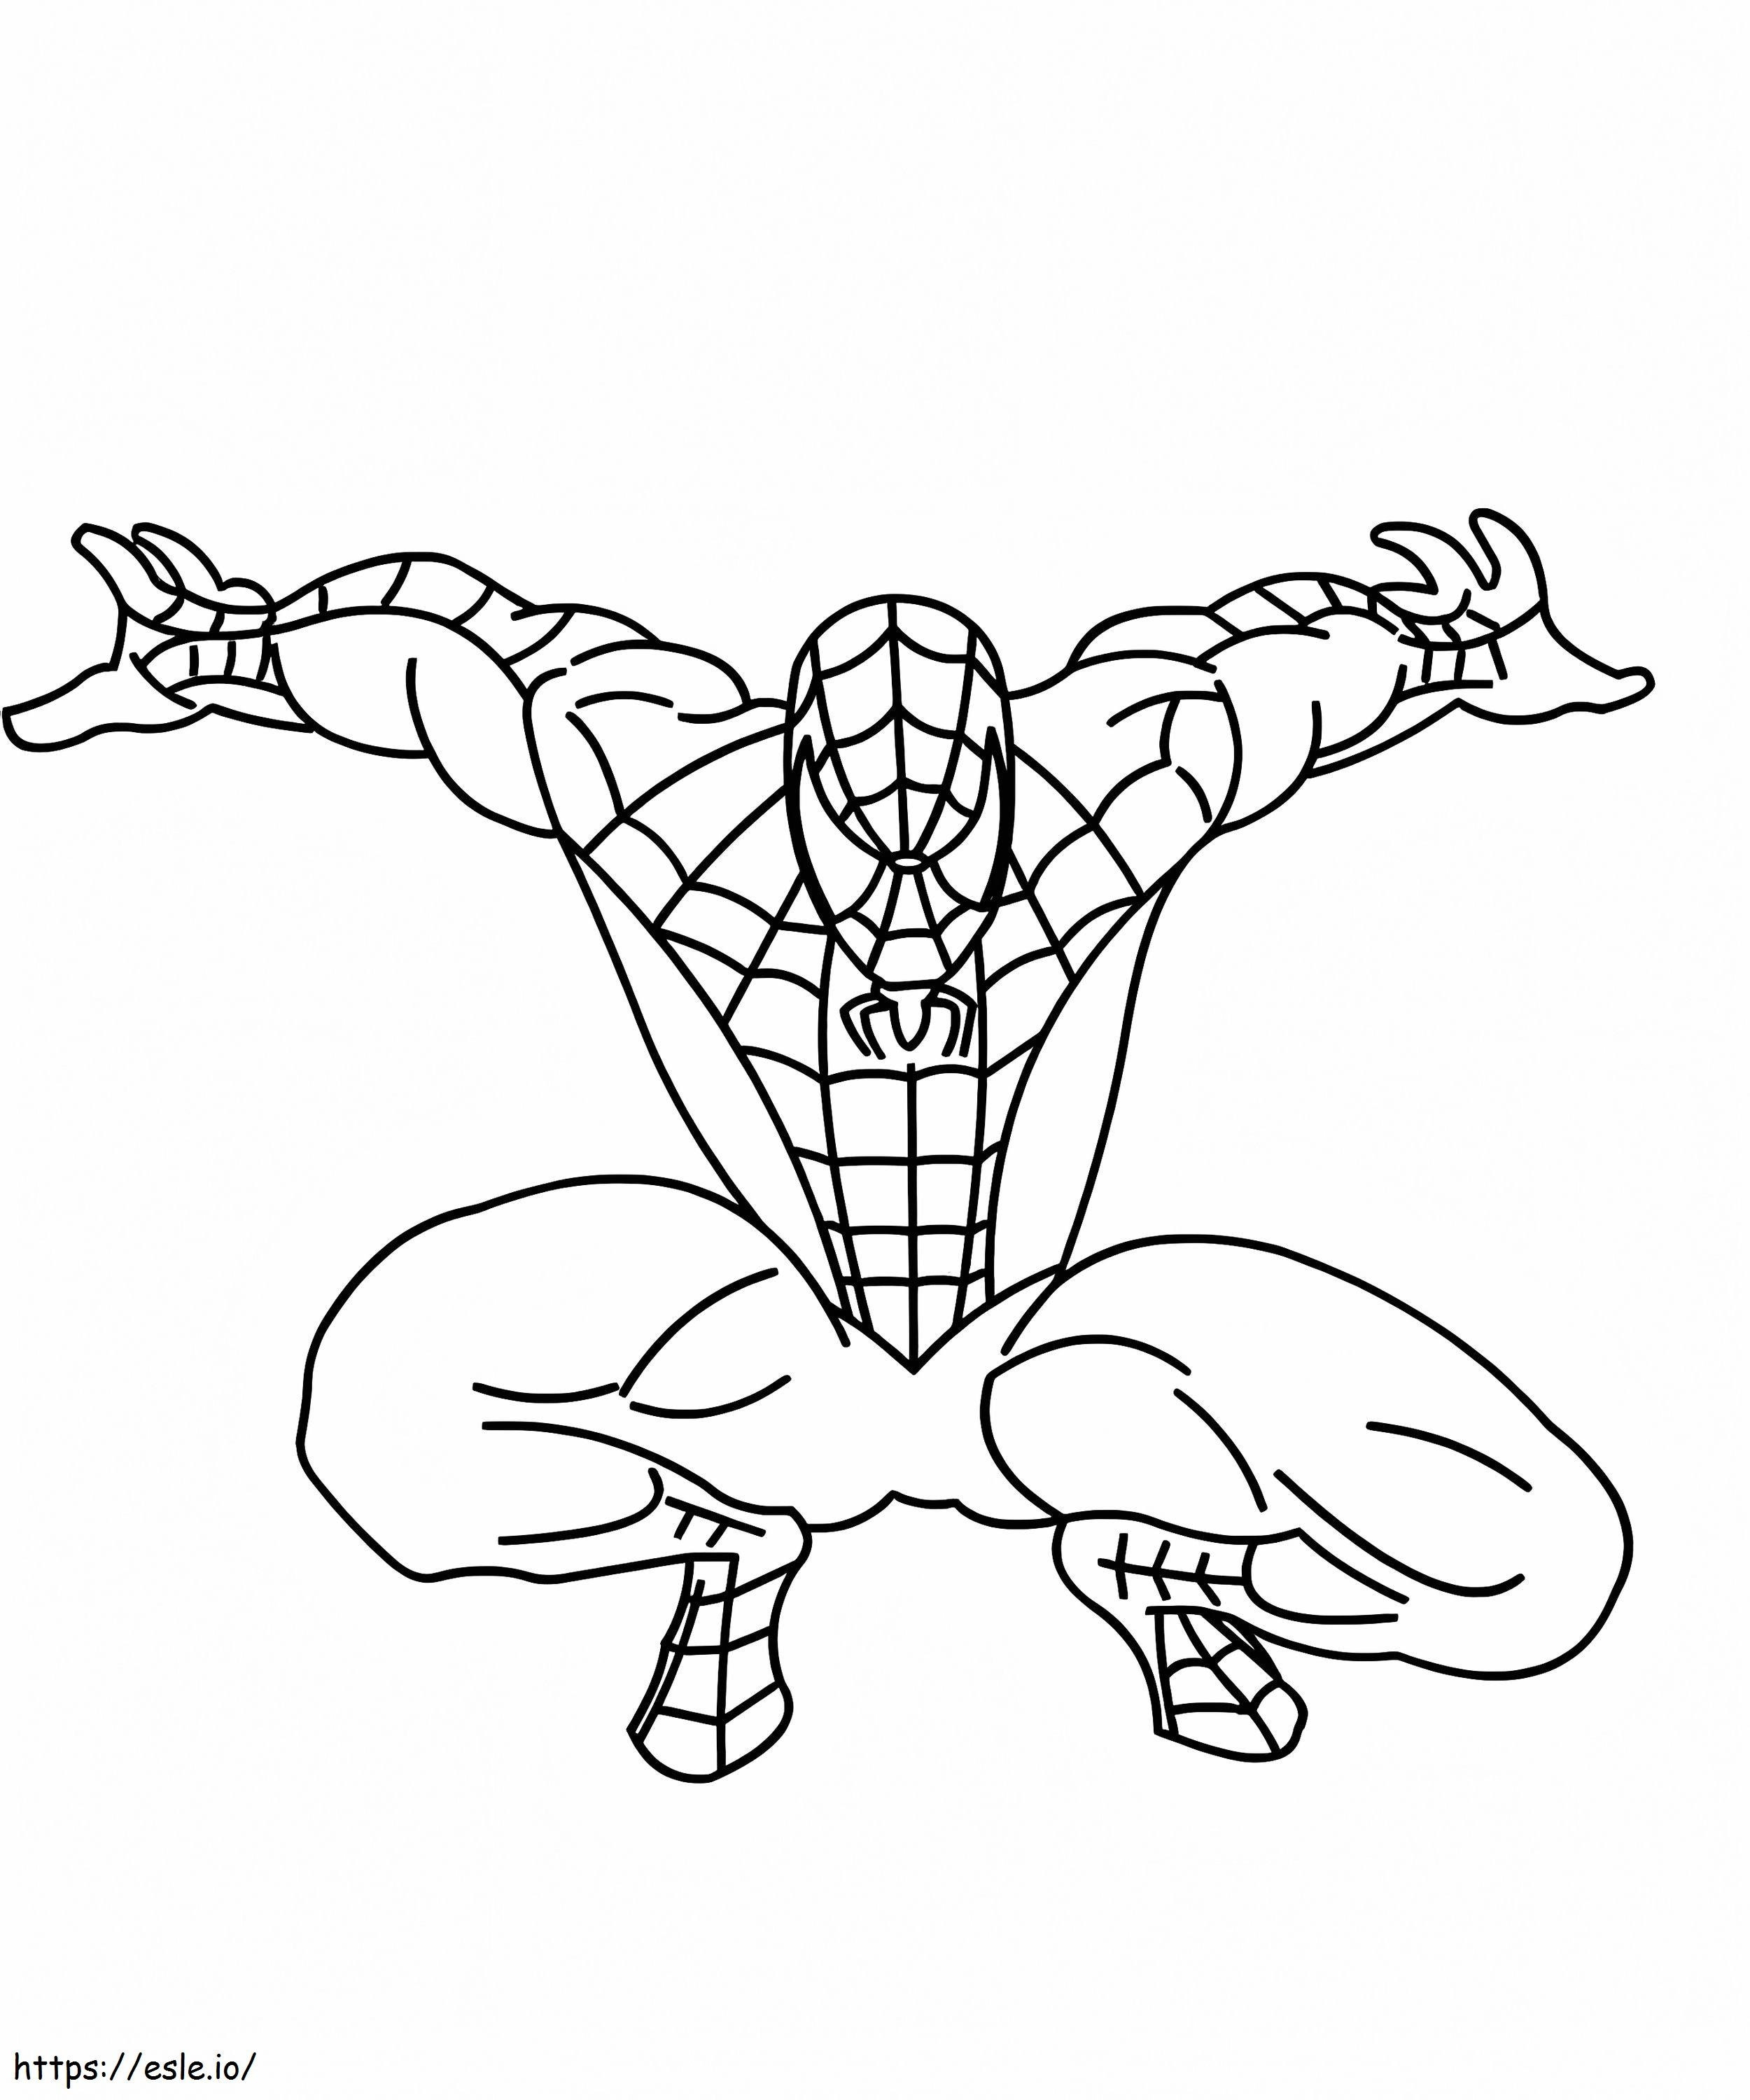 Coloriage Spider-Man facile à imprimer dessin